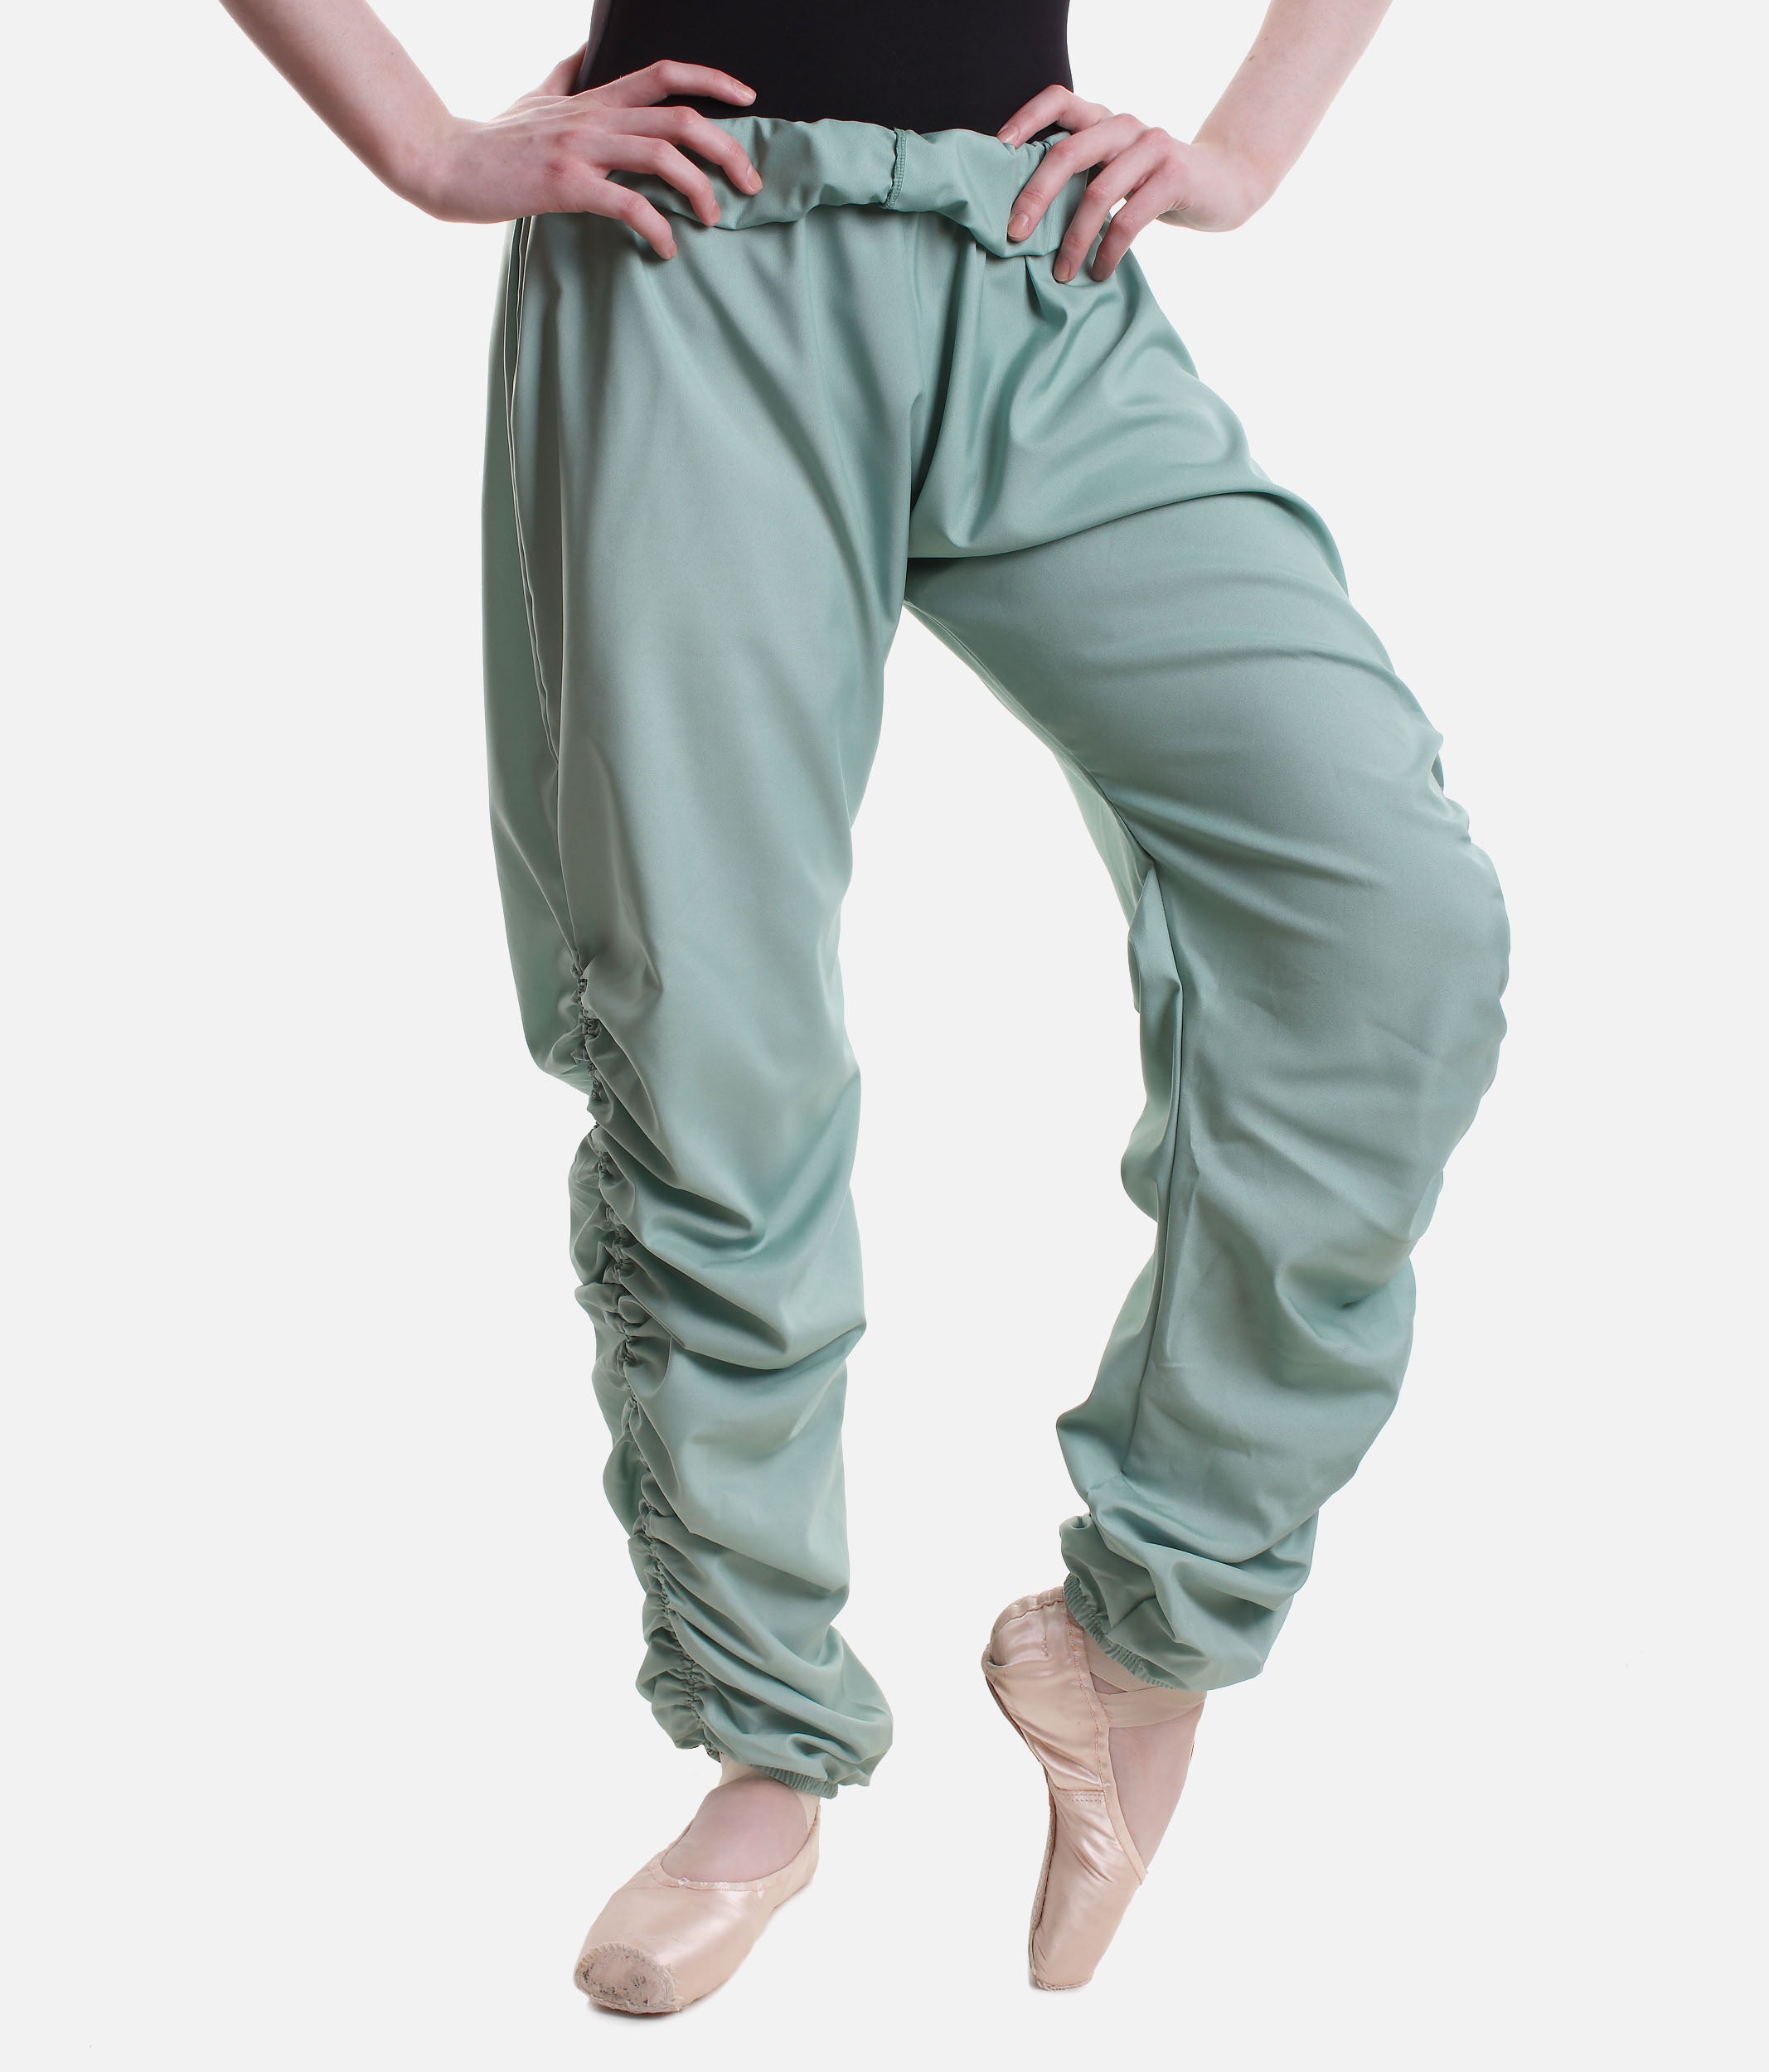 Warmup Pants, Green Dance Pants - So Danca UK & Ireland